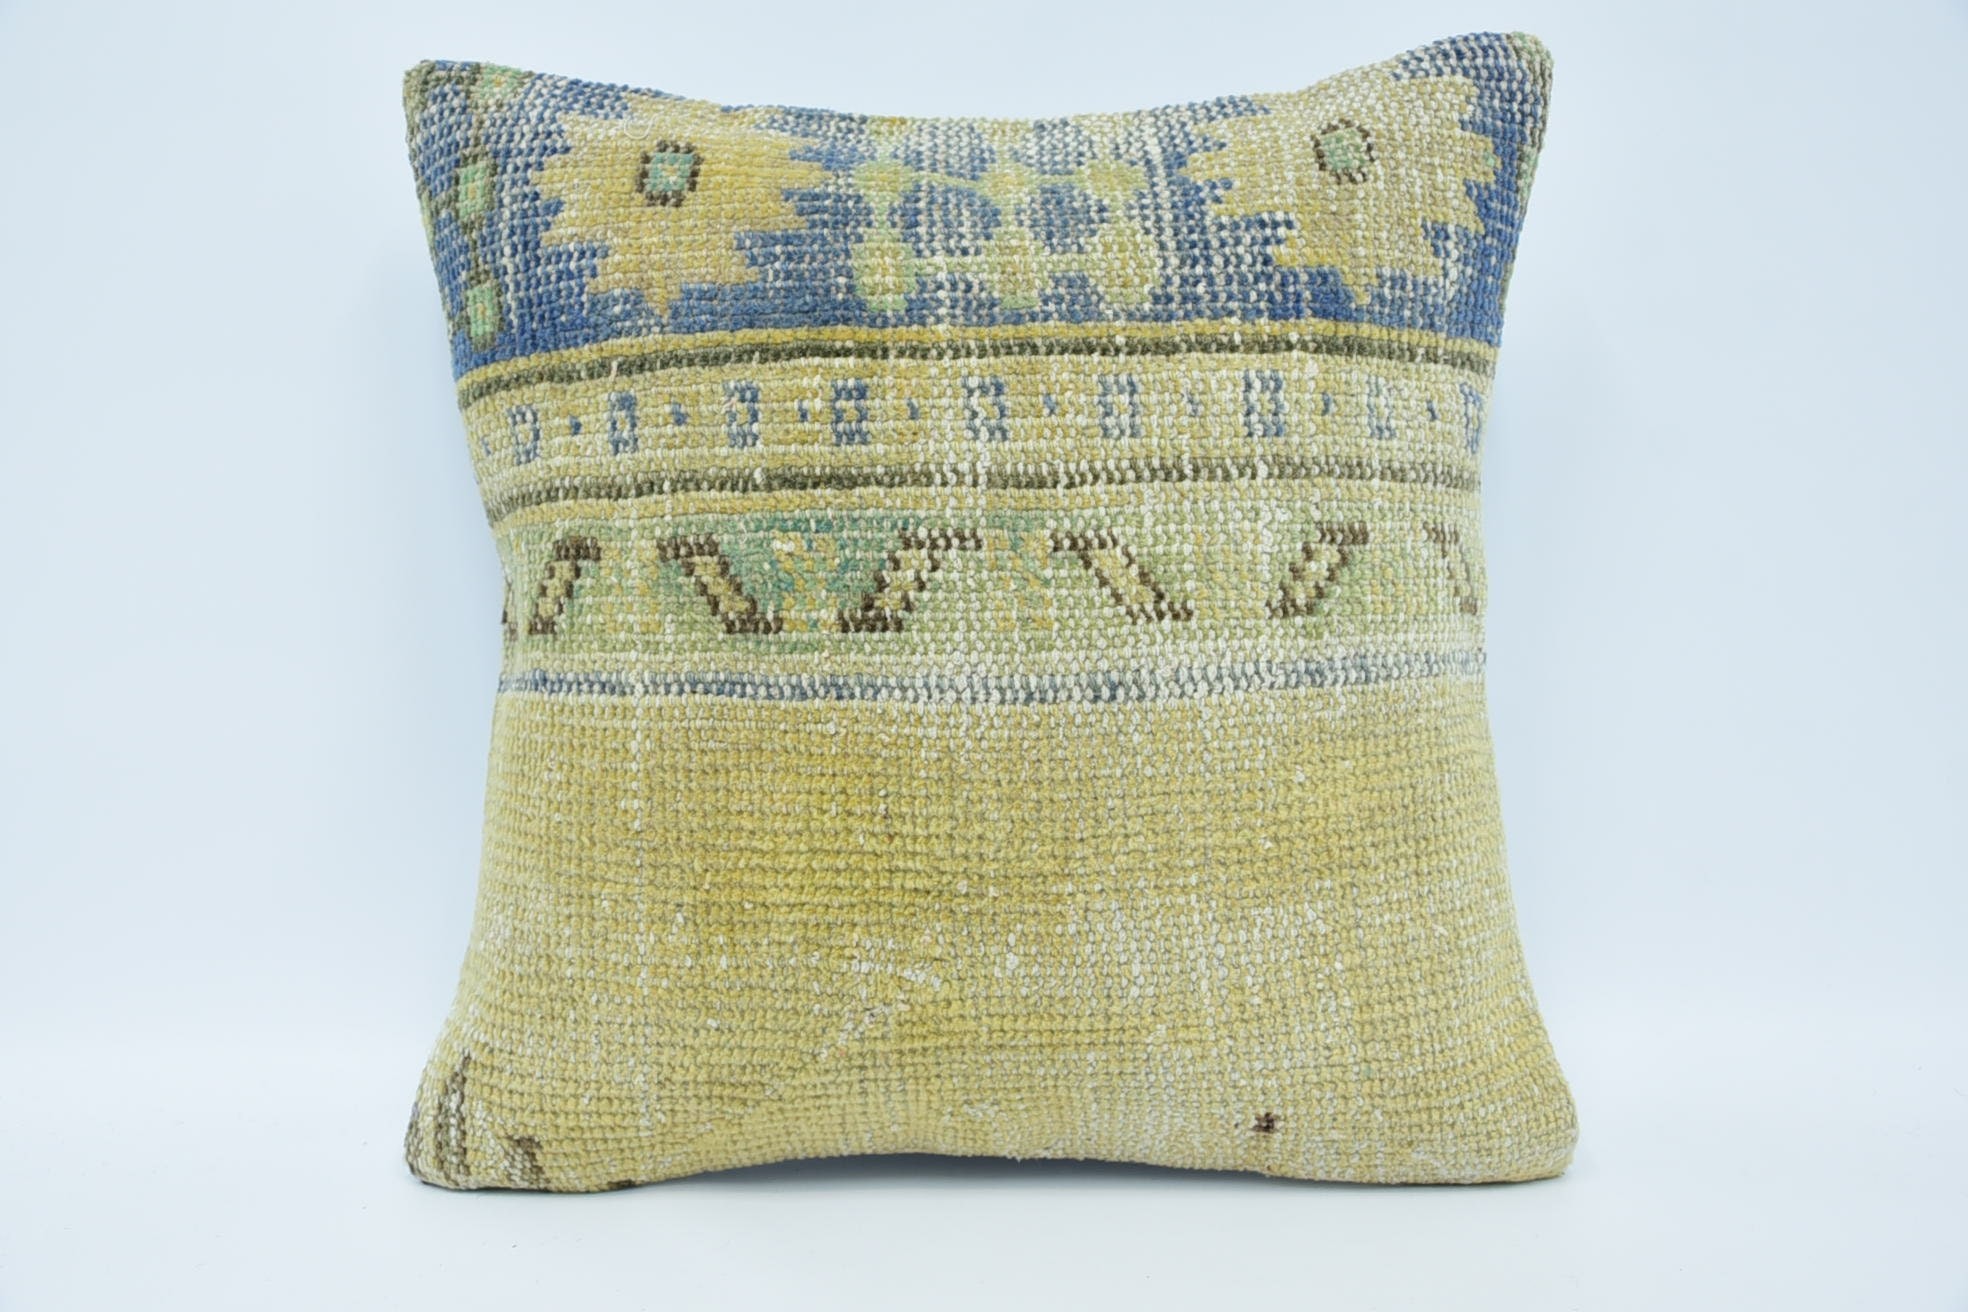 18"x18" Beige Pillow Sham, Meditation Cushion Cover, Turkish Pillow, Home Decor Pillow, Tribal Cushion Cover, Pillow for Sofa